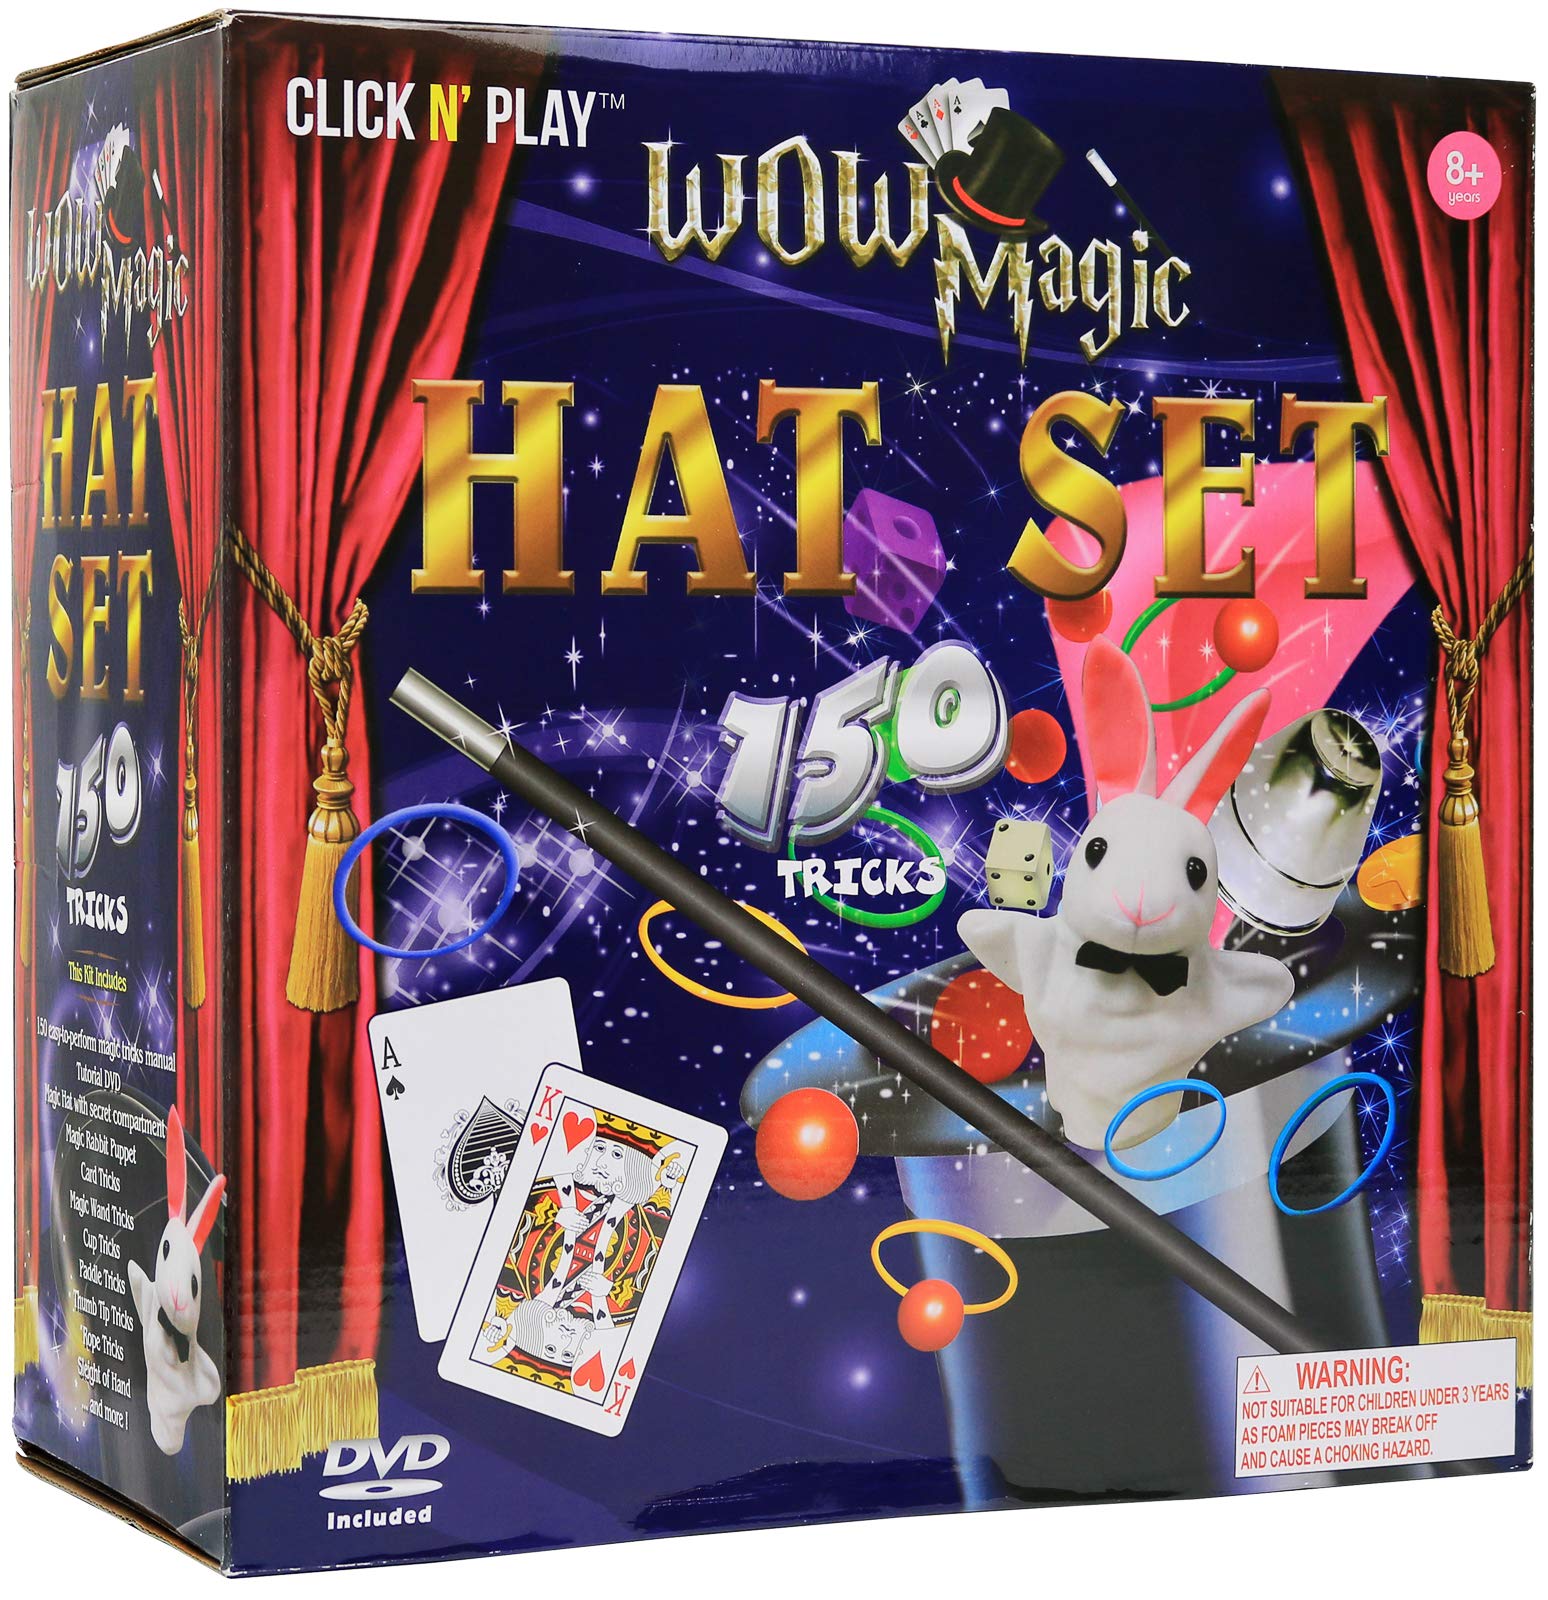 Click N' Play Magician Dress Up & Magic Tricks Set for Kids, Halloween Magic Trick Games for Girls & Boys, Kids Magic Set, Over 150 Tricks, Includes Manual & DVD Tutorial, Magic Kit for Kids Age 8-10